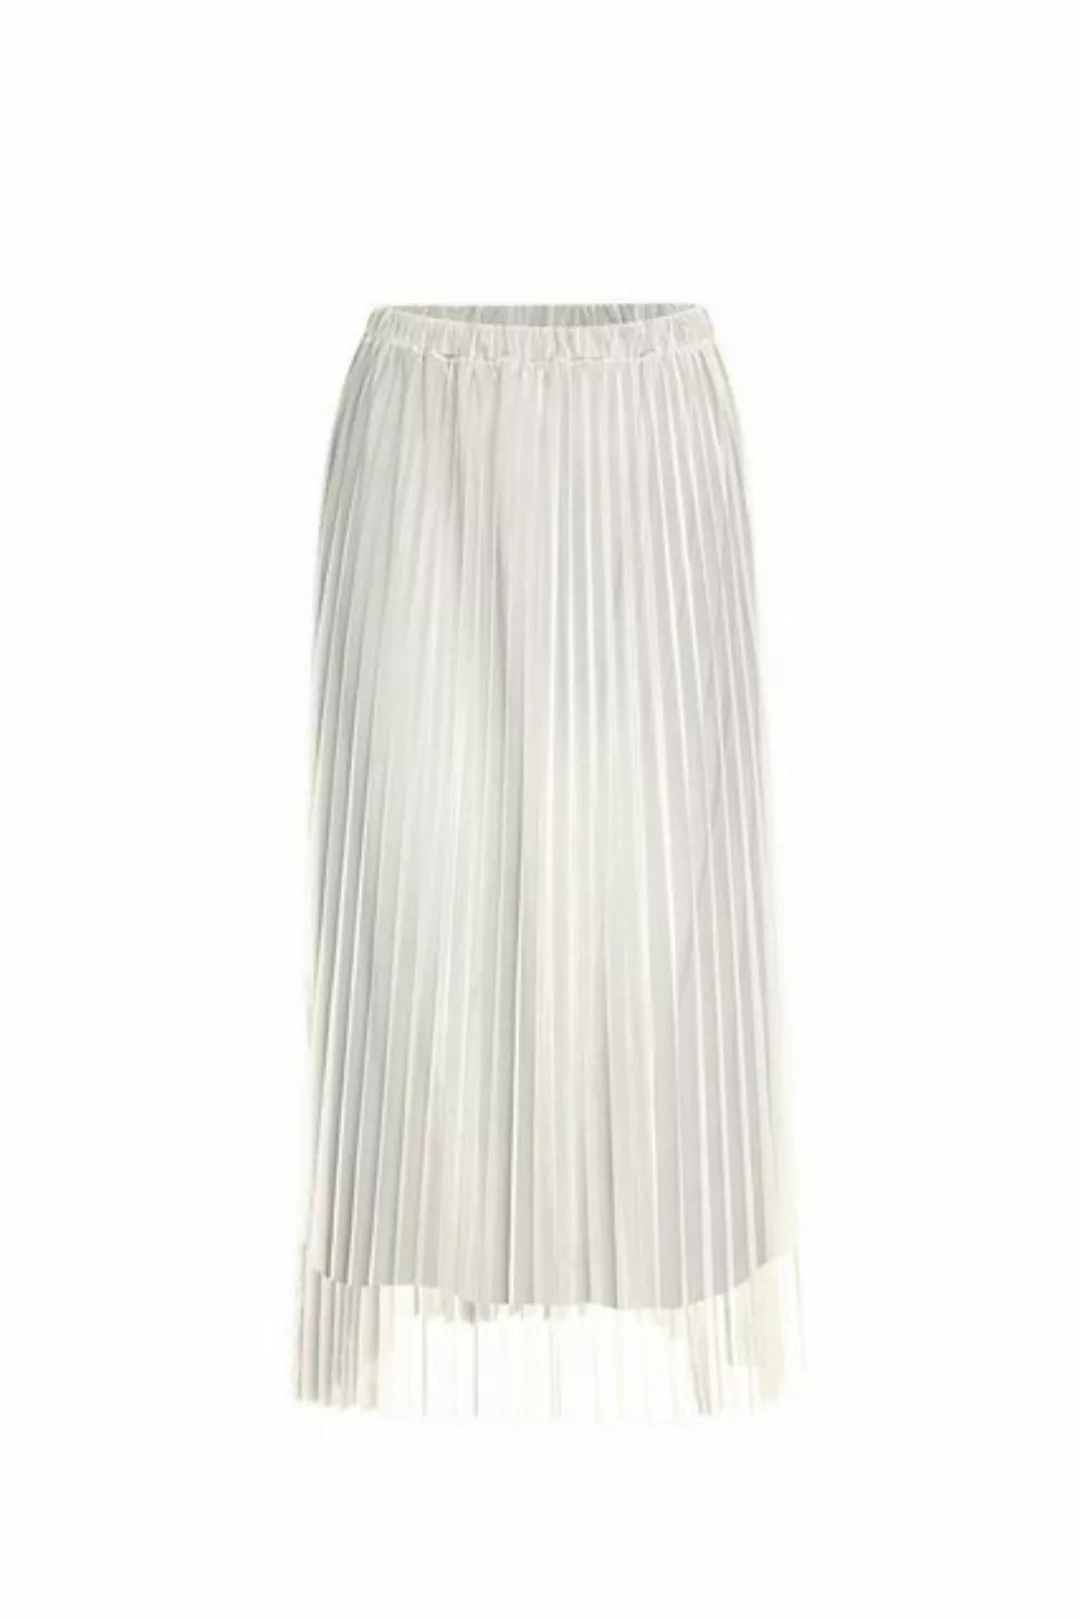 Rich & Royal Sommerrock Tulle plissee skirt, pearl white günstig online kaufen